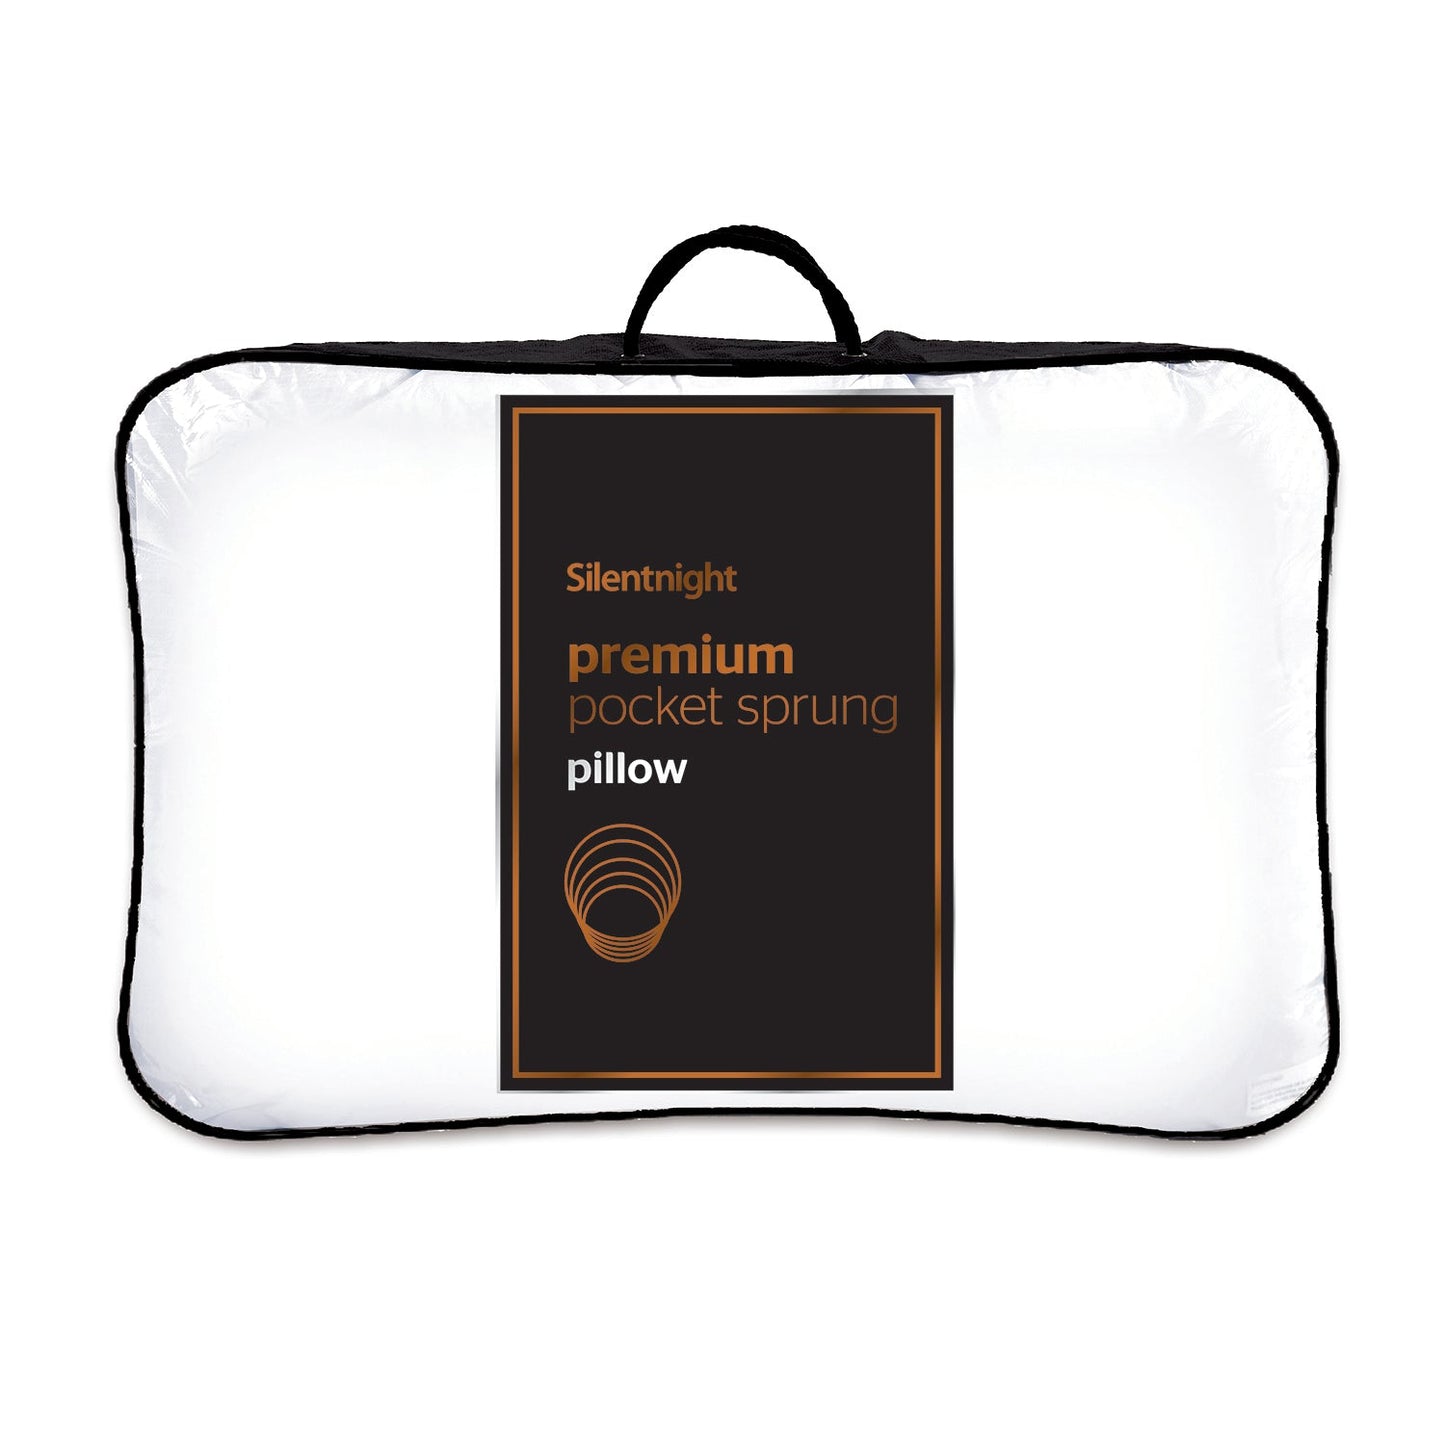 Silentnight Premium Pocket Sprung Pillow